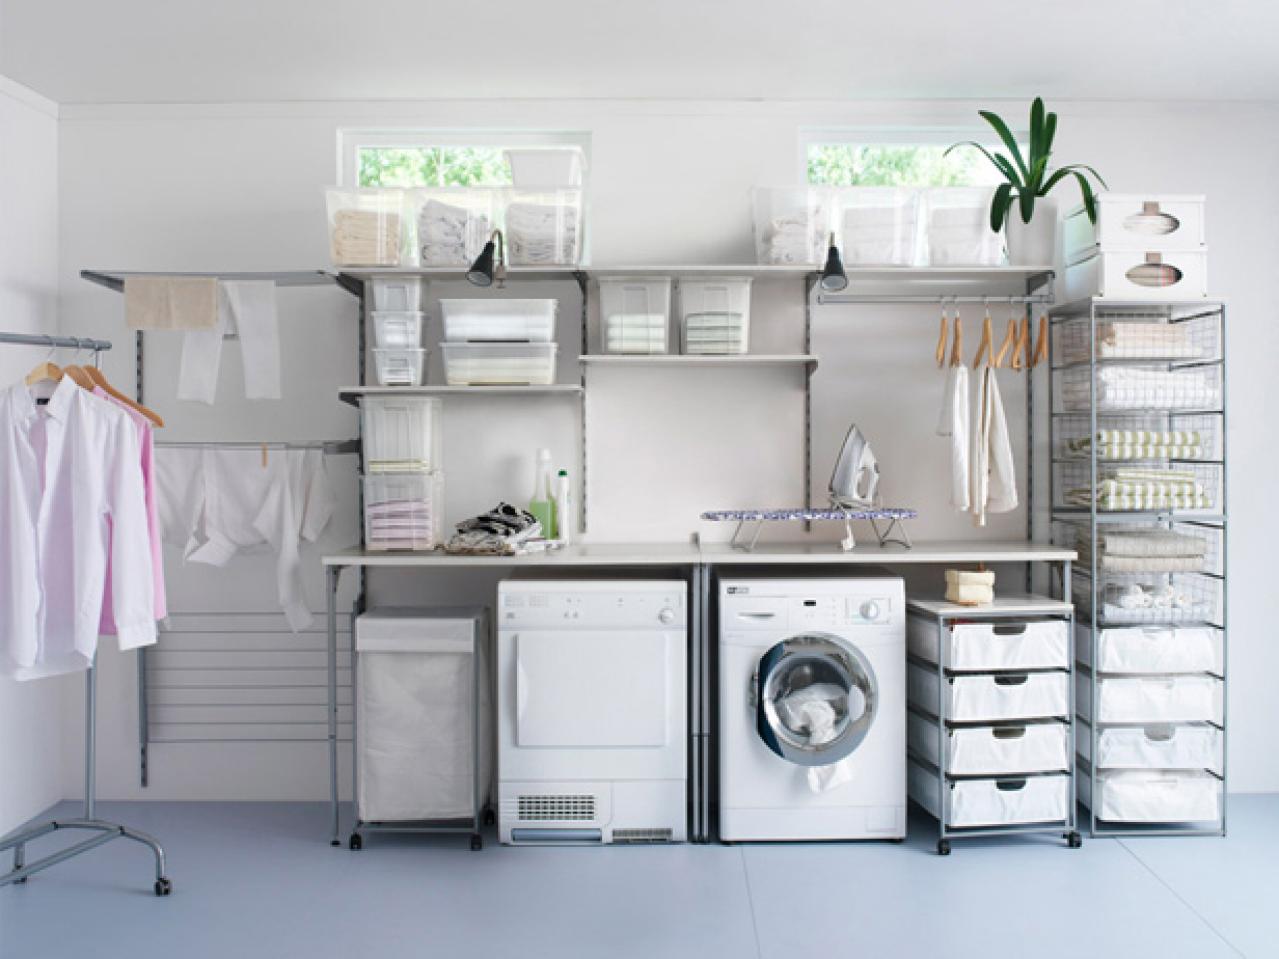 Laundry Room Storage Ideas Diy, Shelving Units For Utility Room